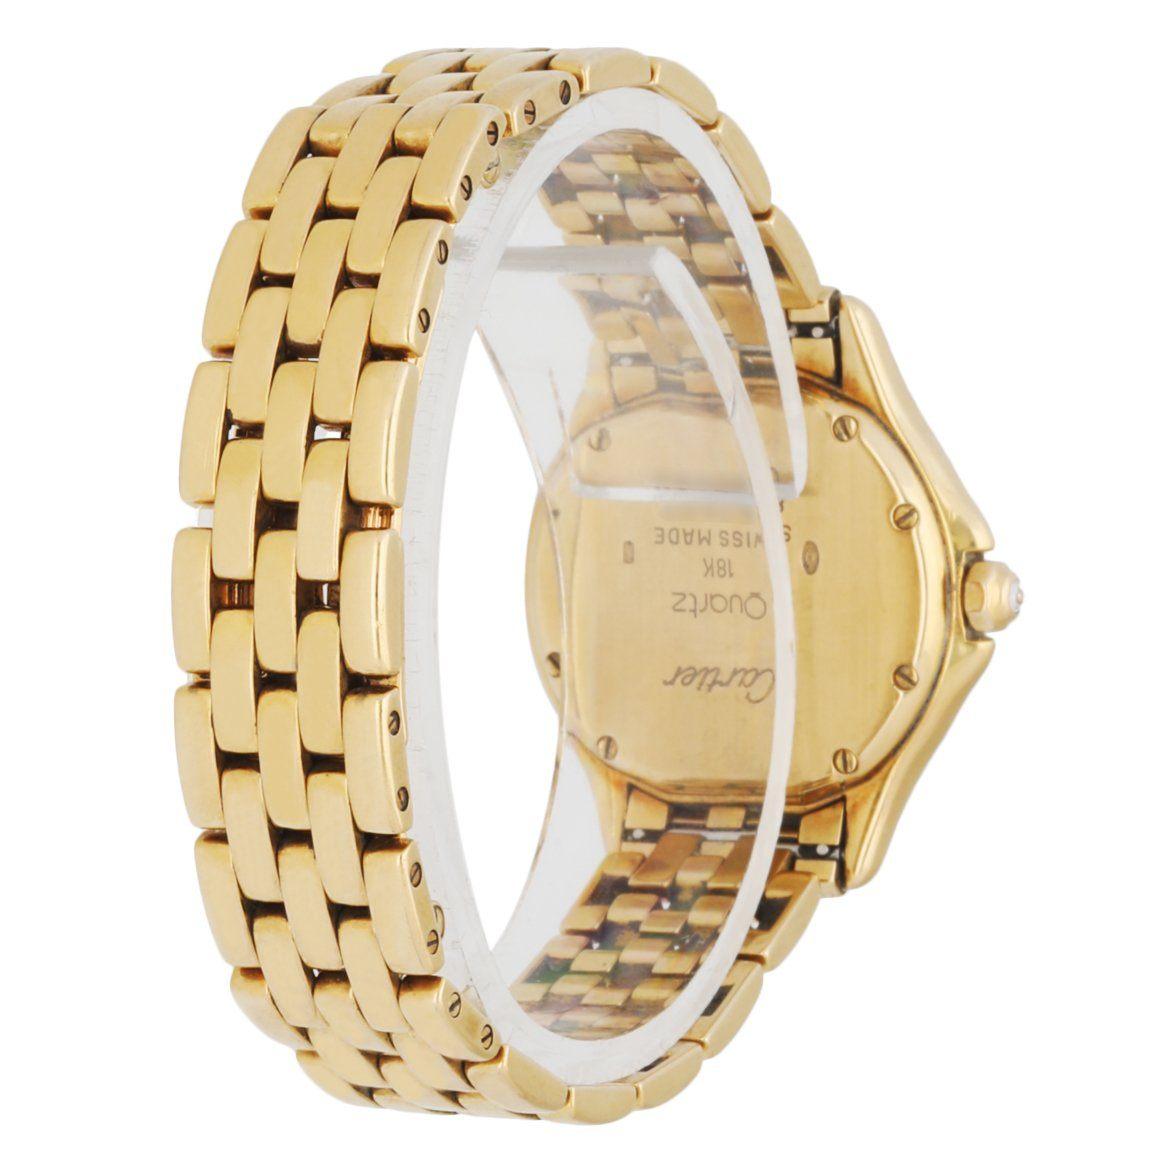 Women's Cartier Panthere Cougar 887907 18K Yellow Gold & Diamond Ladies Watch